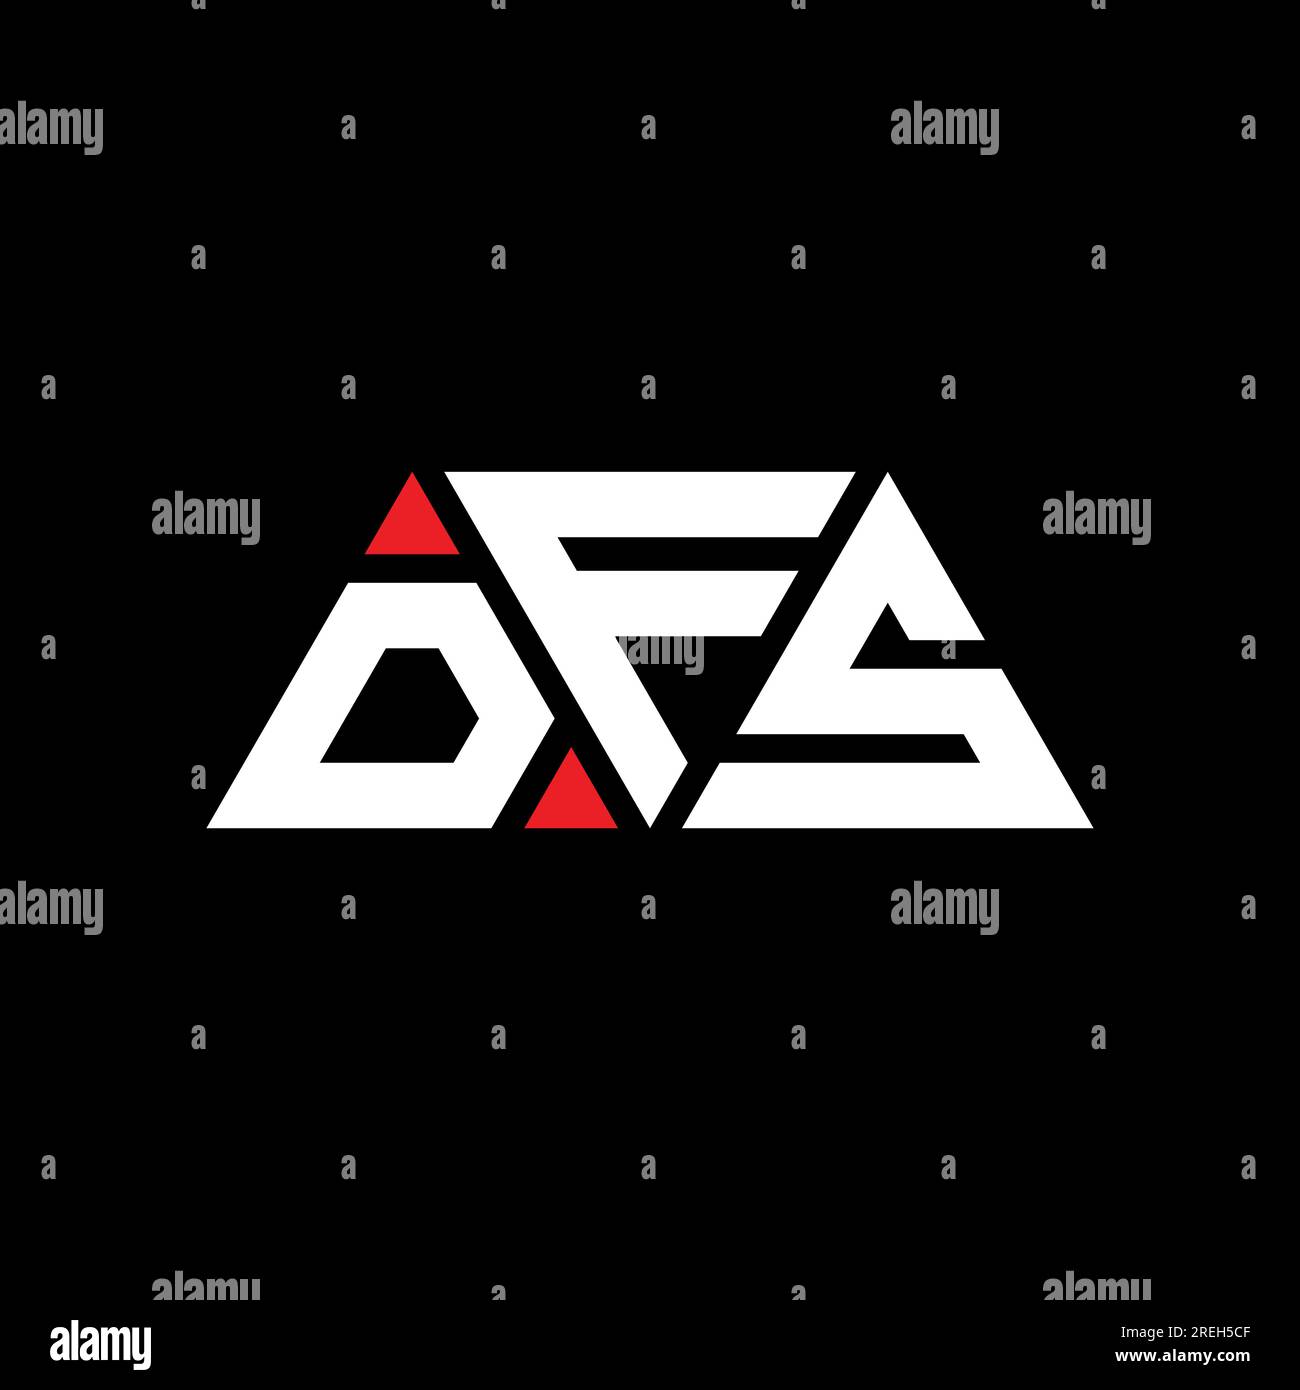 Dfs letter logo design on white background Vector Image